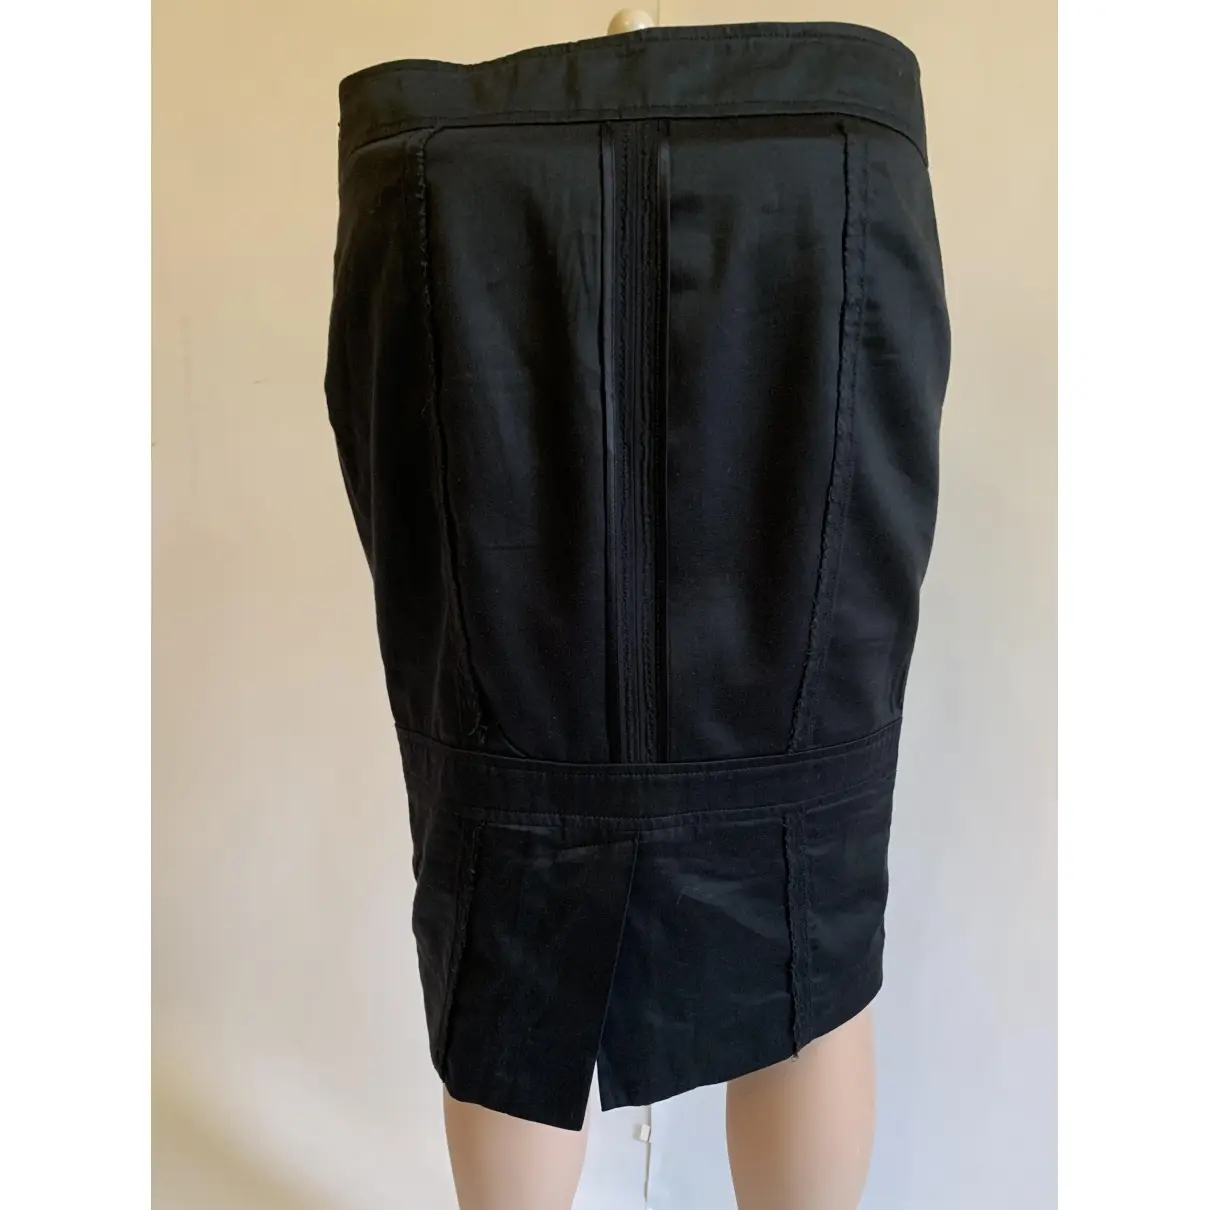 Antonio Berardi Mid-length skirt for sale